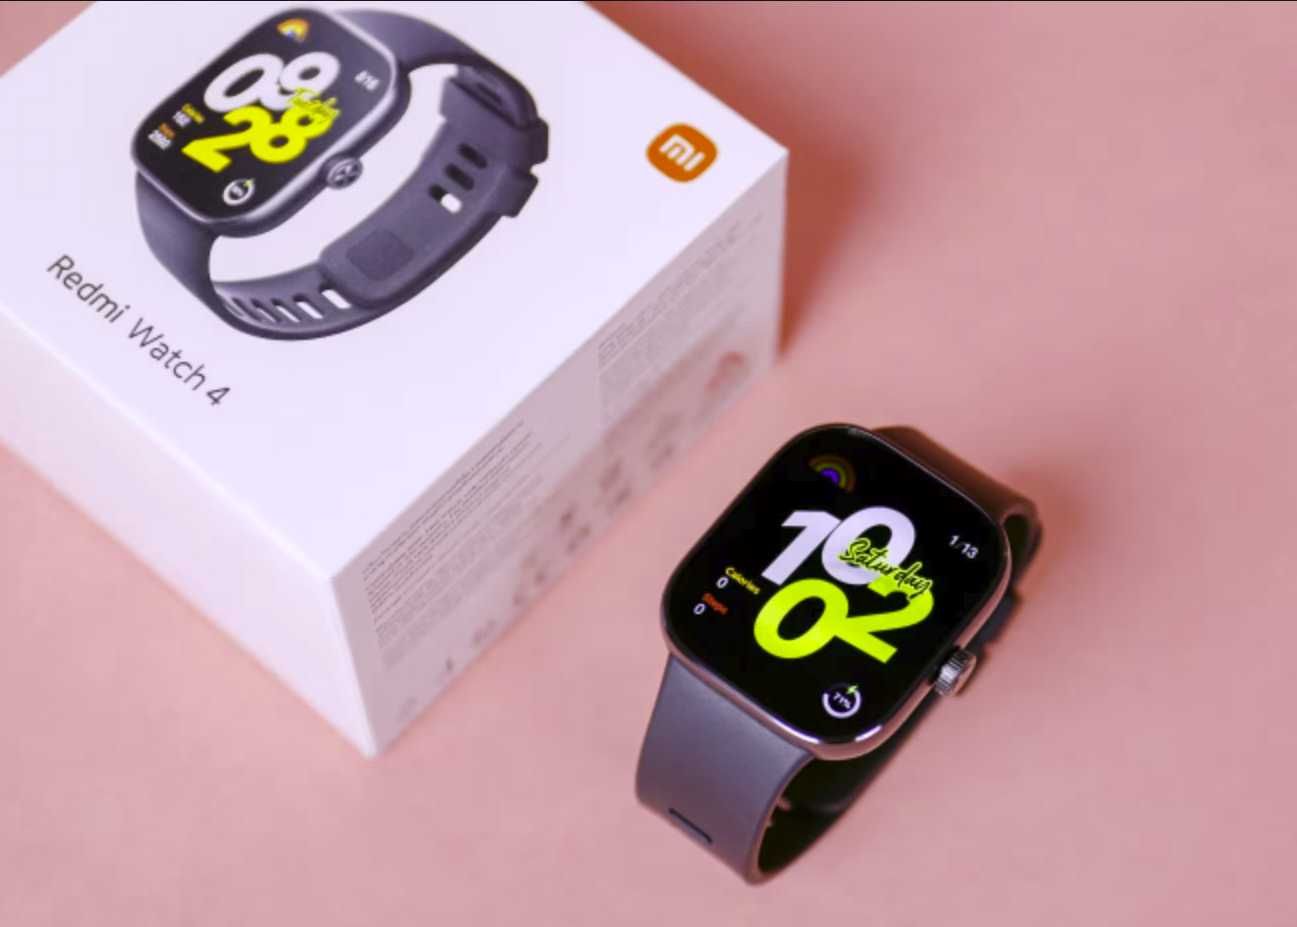 Xiaomi Redmi Watch 4 (Global) Black, bt-дзвінки, AMOLED смарт годинник